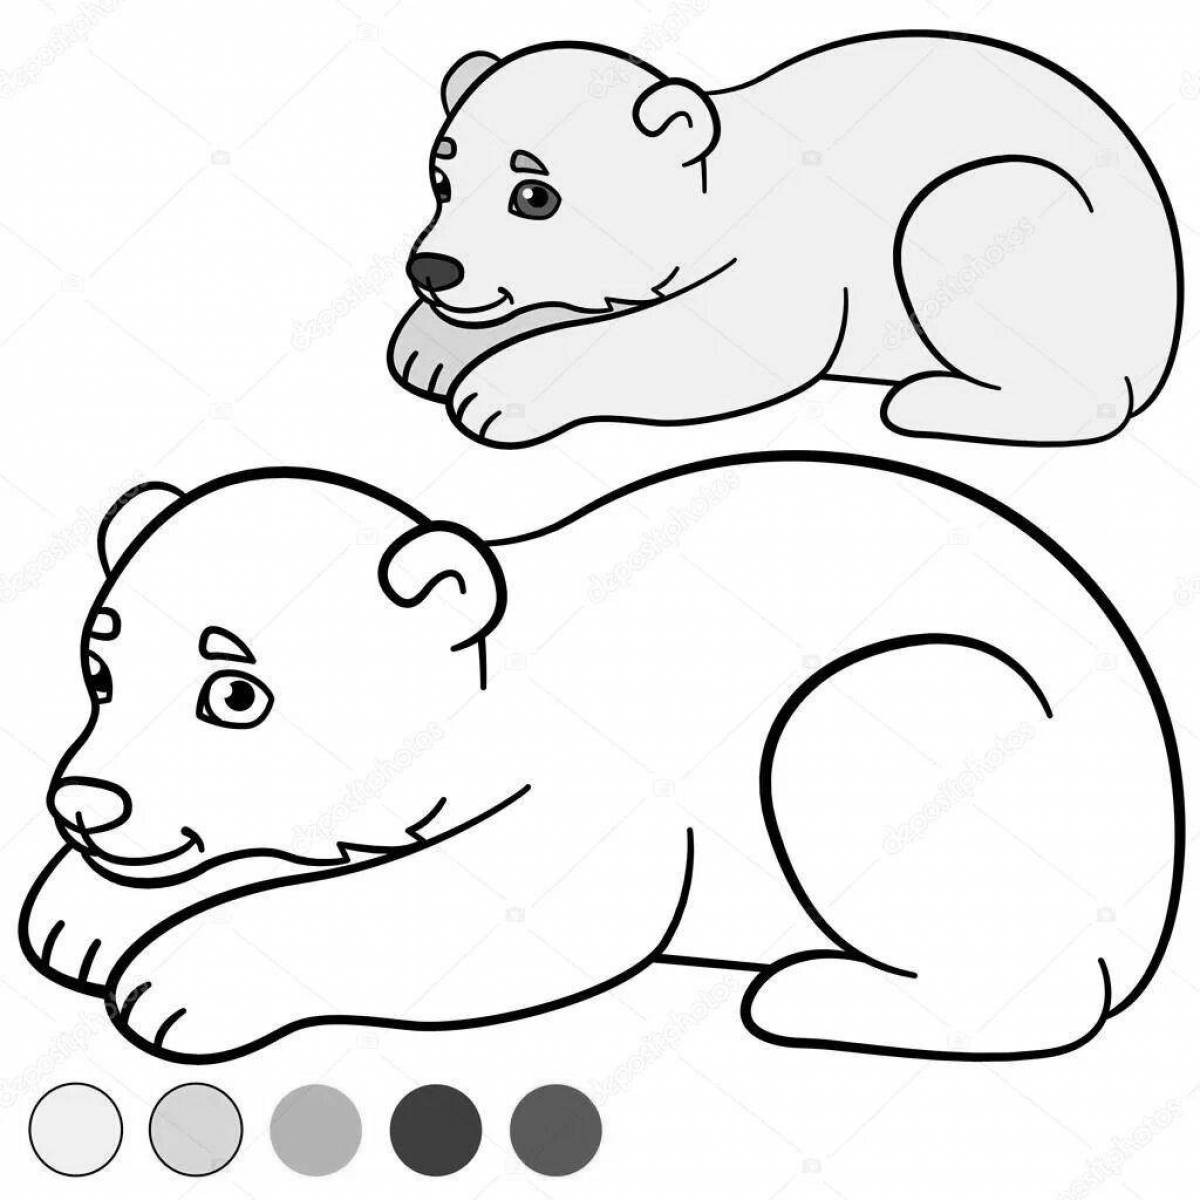 Fun coloring book: why do bears sleep in winter?